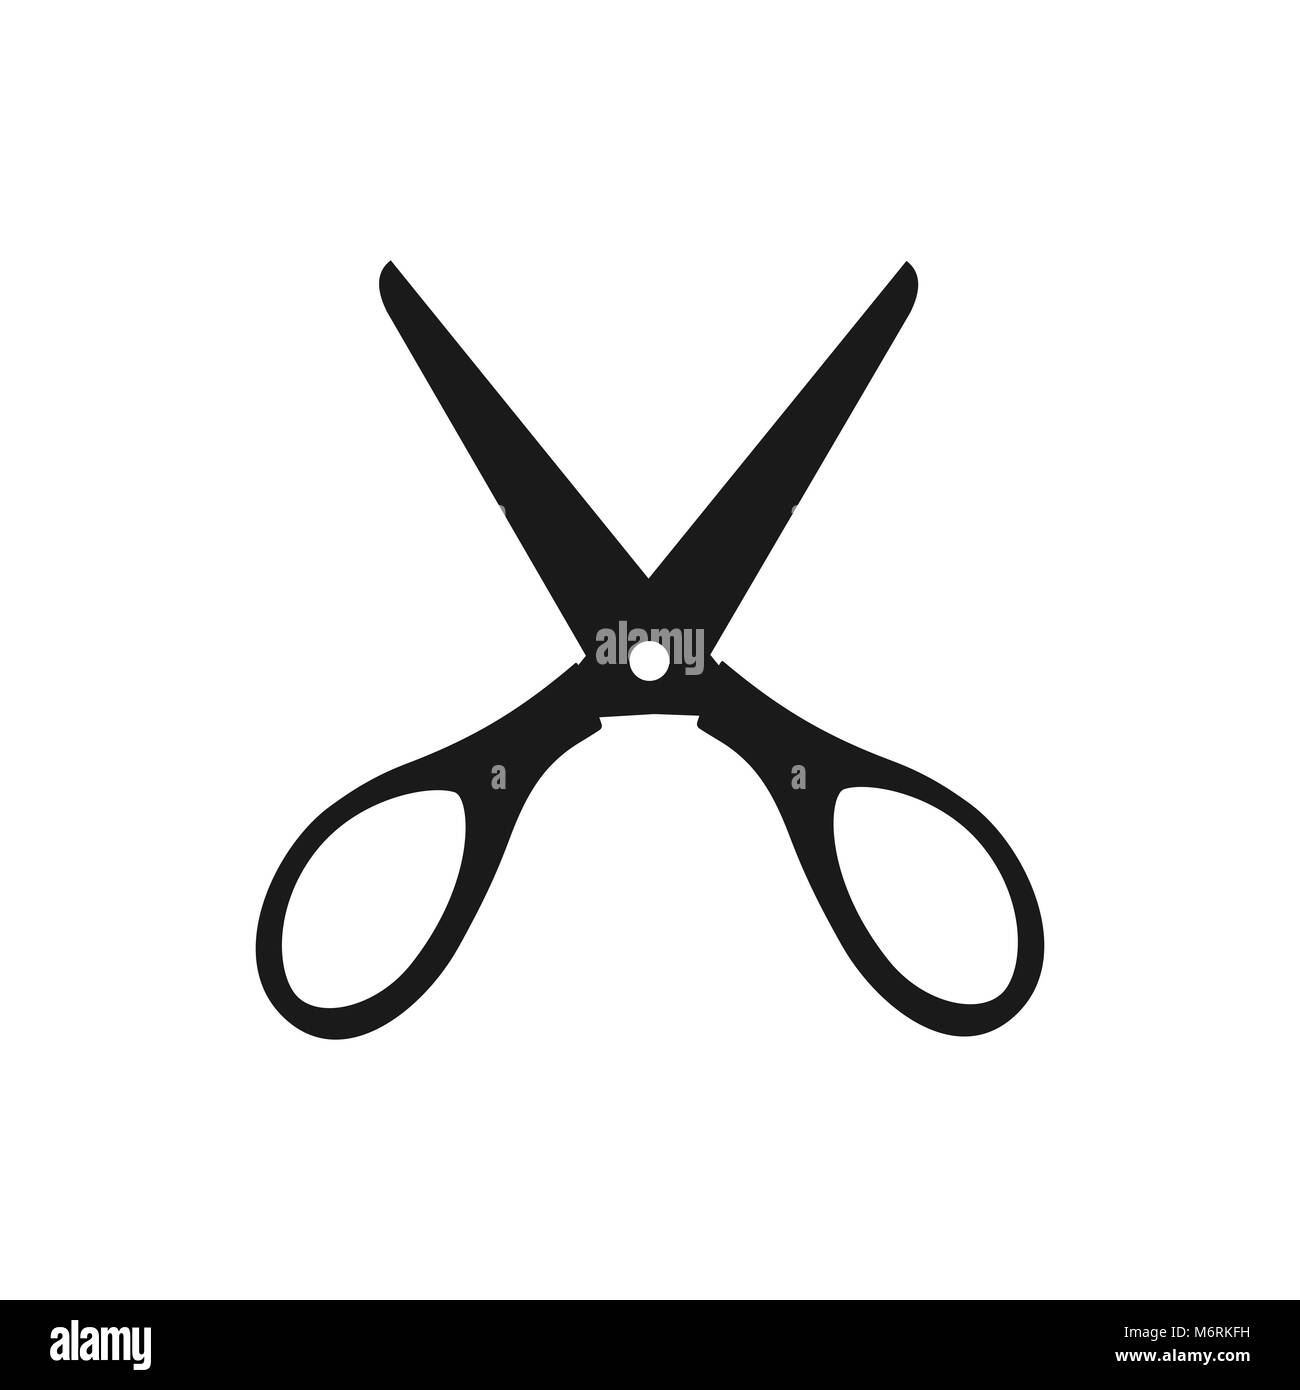 https://c8.alamy.com/comp/M6RKFH/silhouette-of-very-open-scissors-vector-illustration-M6RKFH.jpg